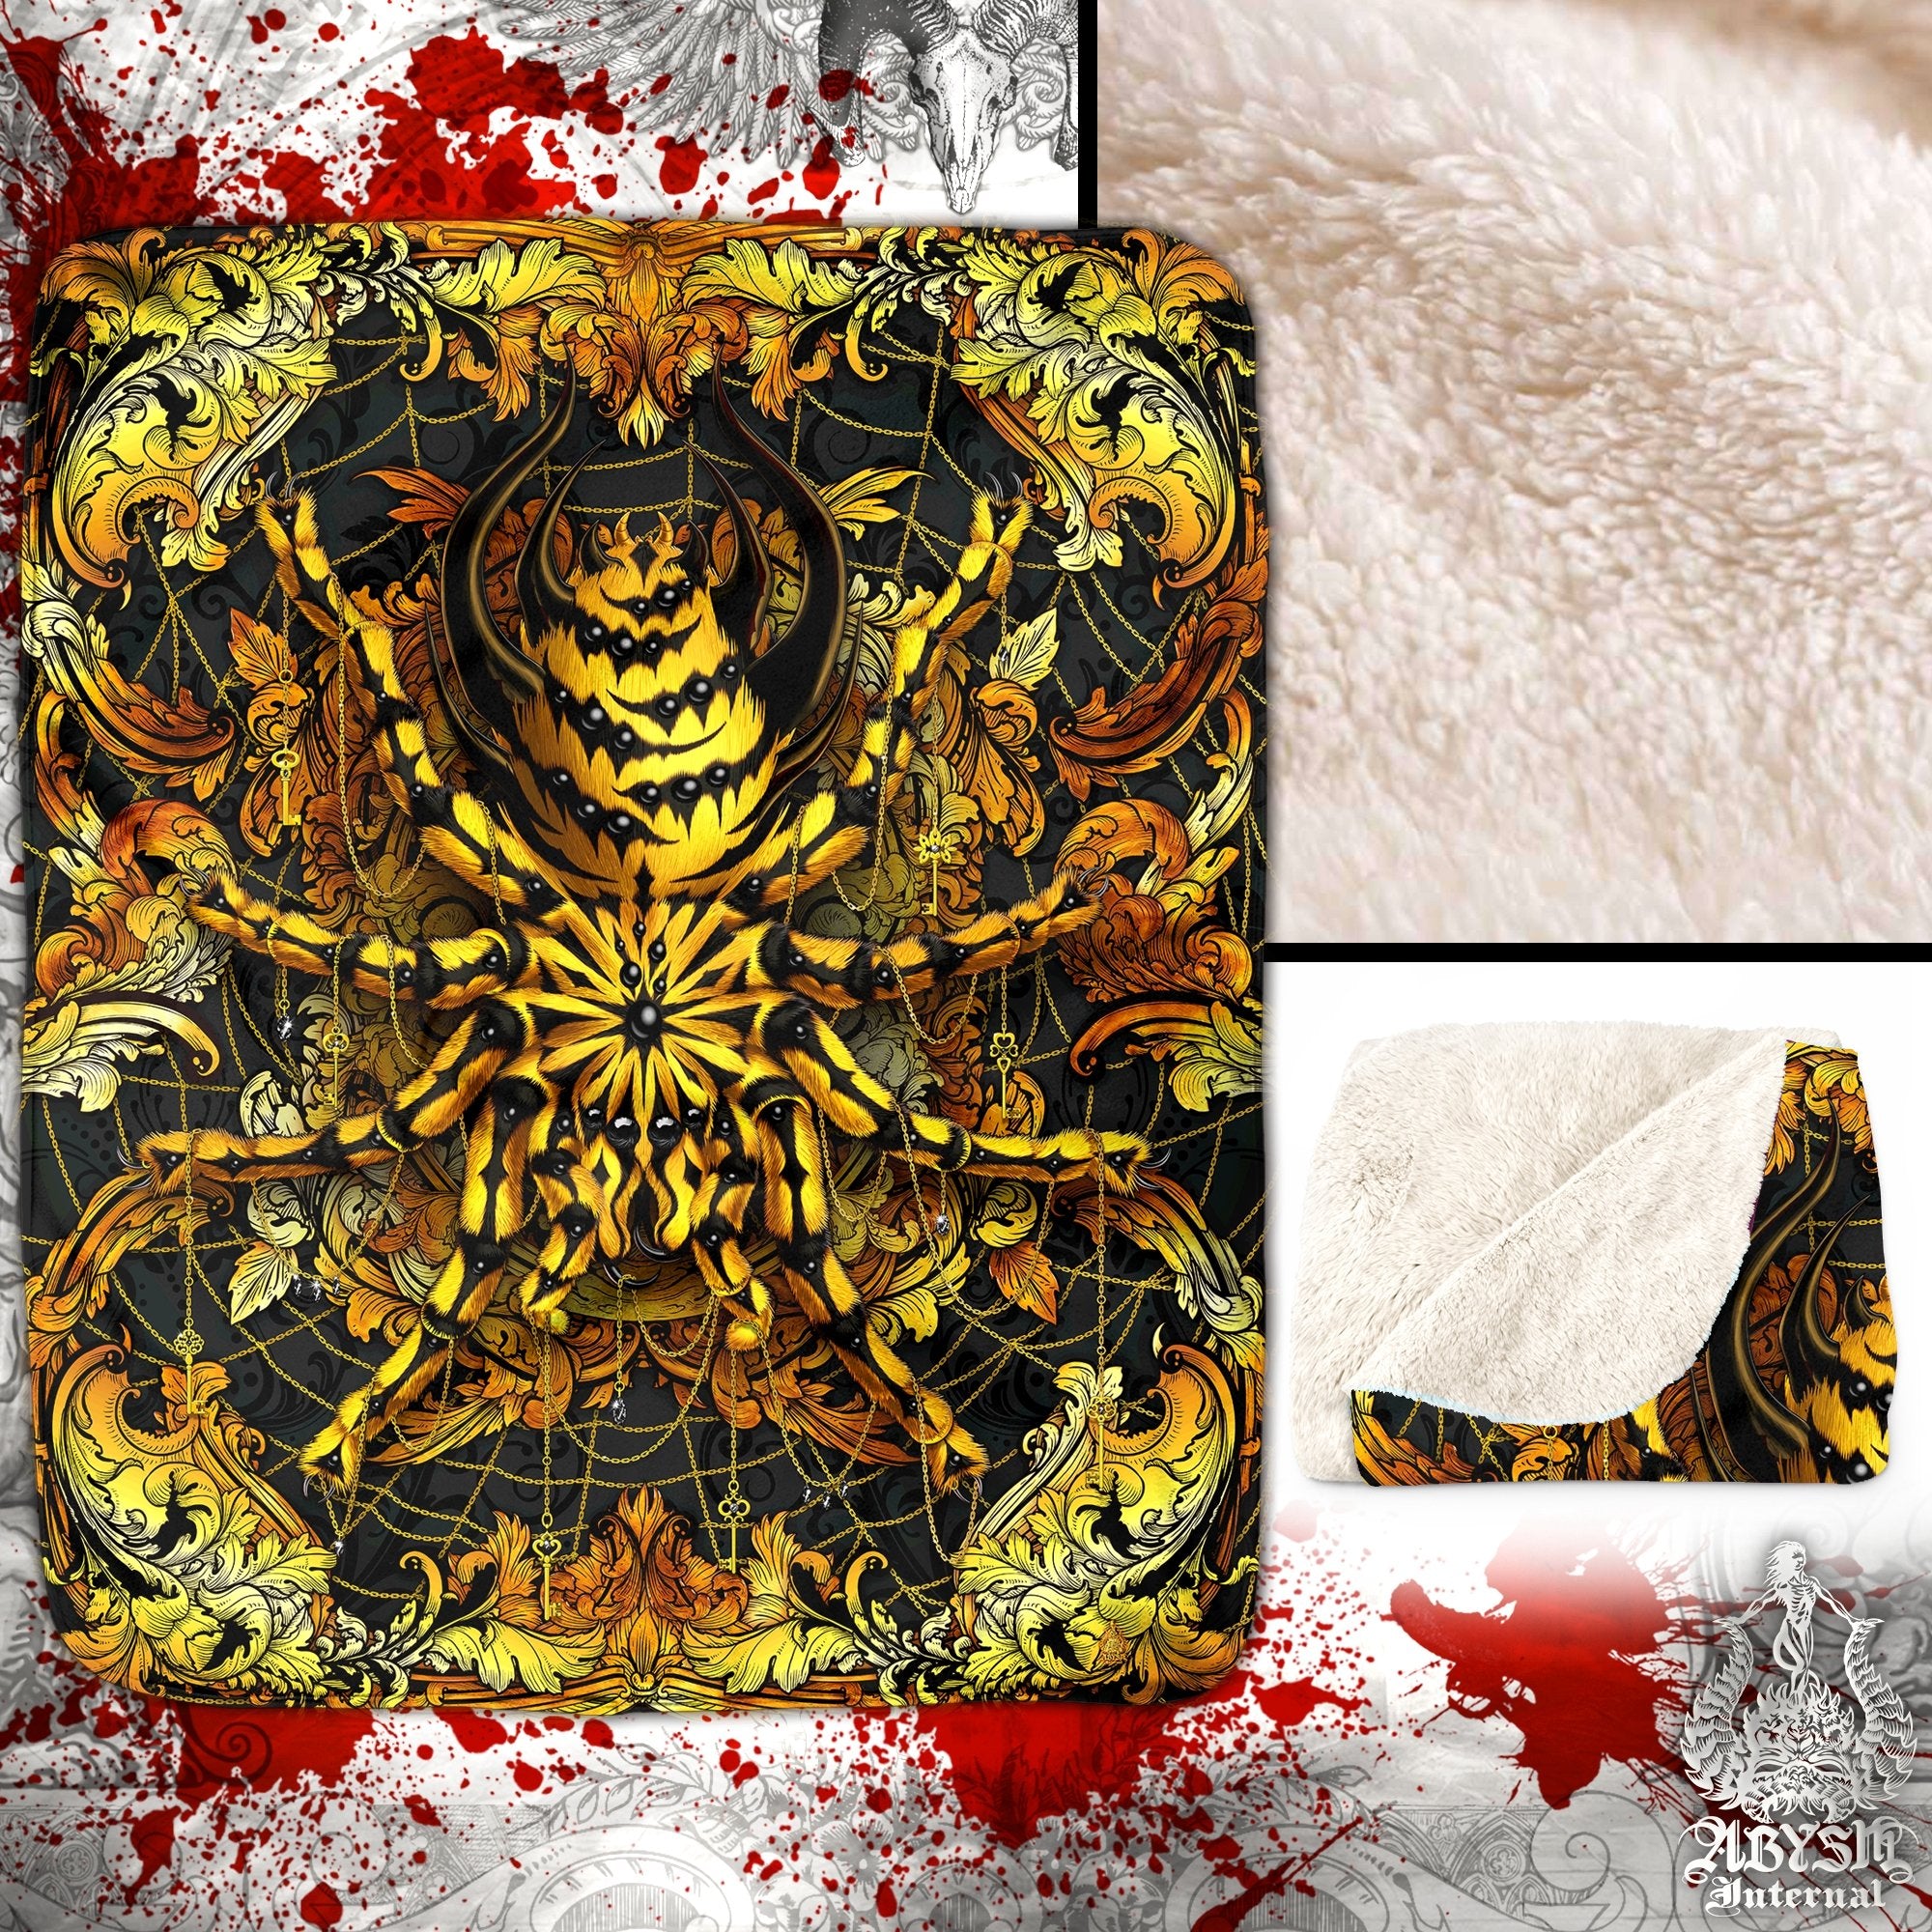 Spider Throw Fleece Blanket, Indie Home Decor, Unique Gift - Gold Black, Tarantula Art - Abysm Internal